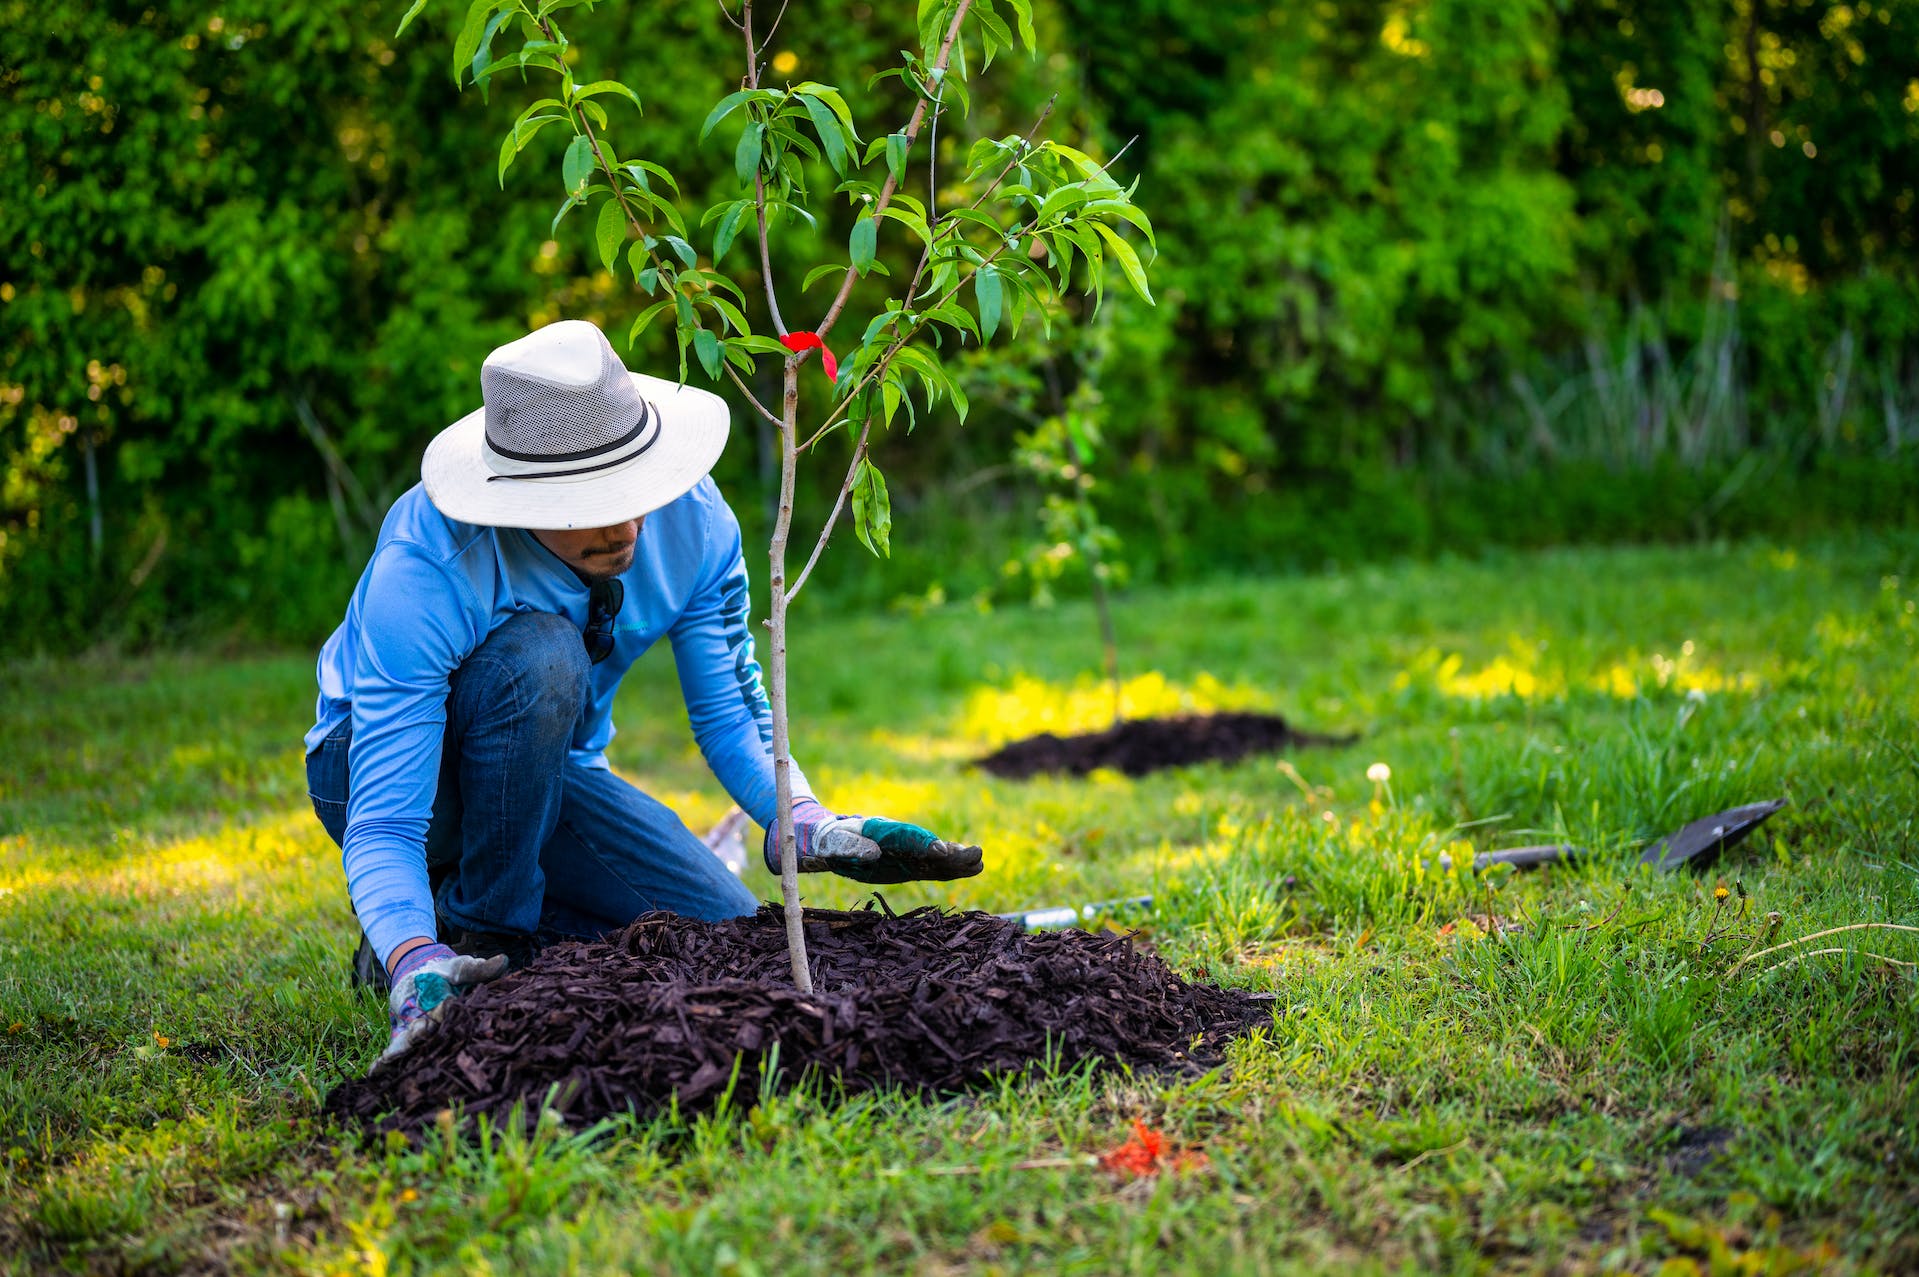 Man in blue long sleeve shirt planting trees in garden